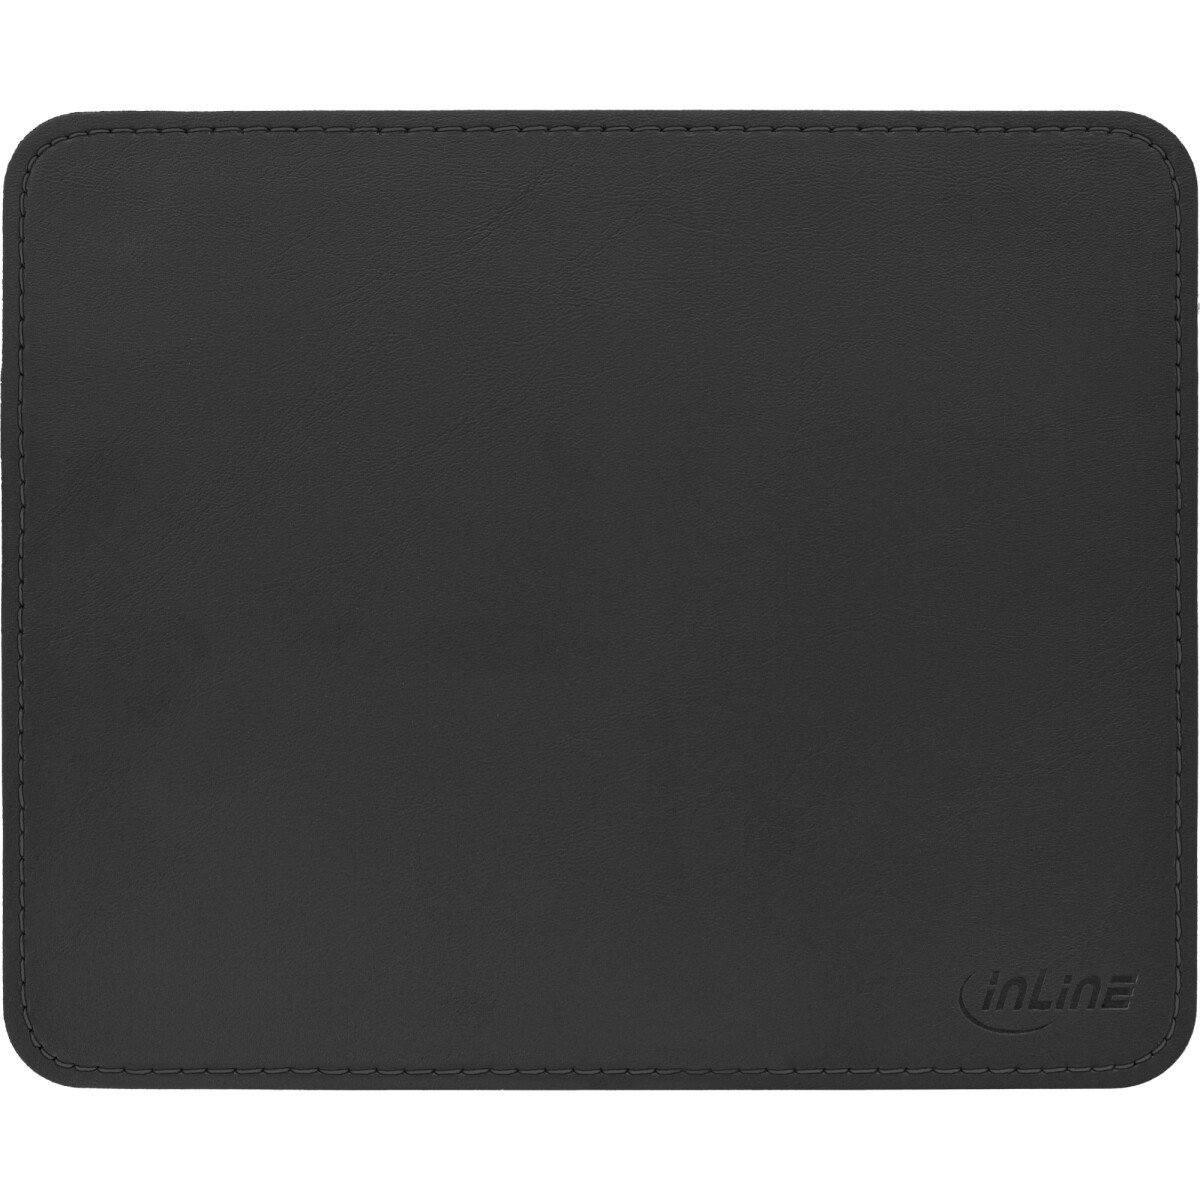 InLine® Mouse pad Premium PU Leather black, 255x220x3mm